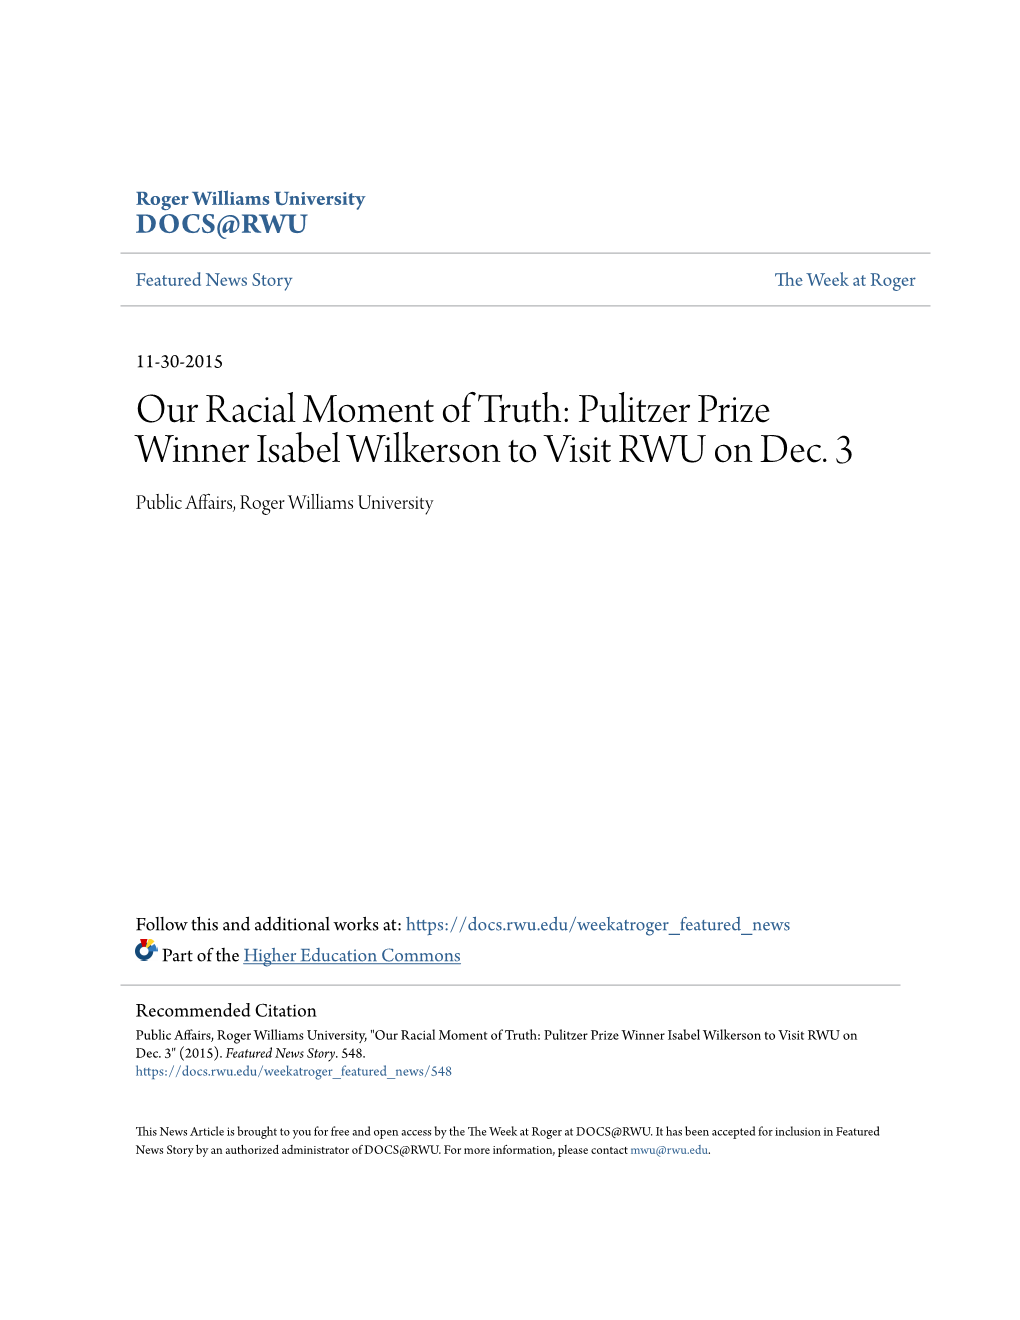 Pulitzer Prize Winner Isabel Wilkerson to Visit RWU on Dec